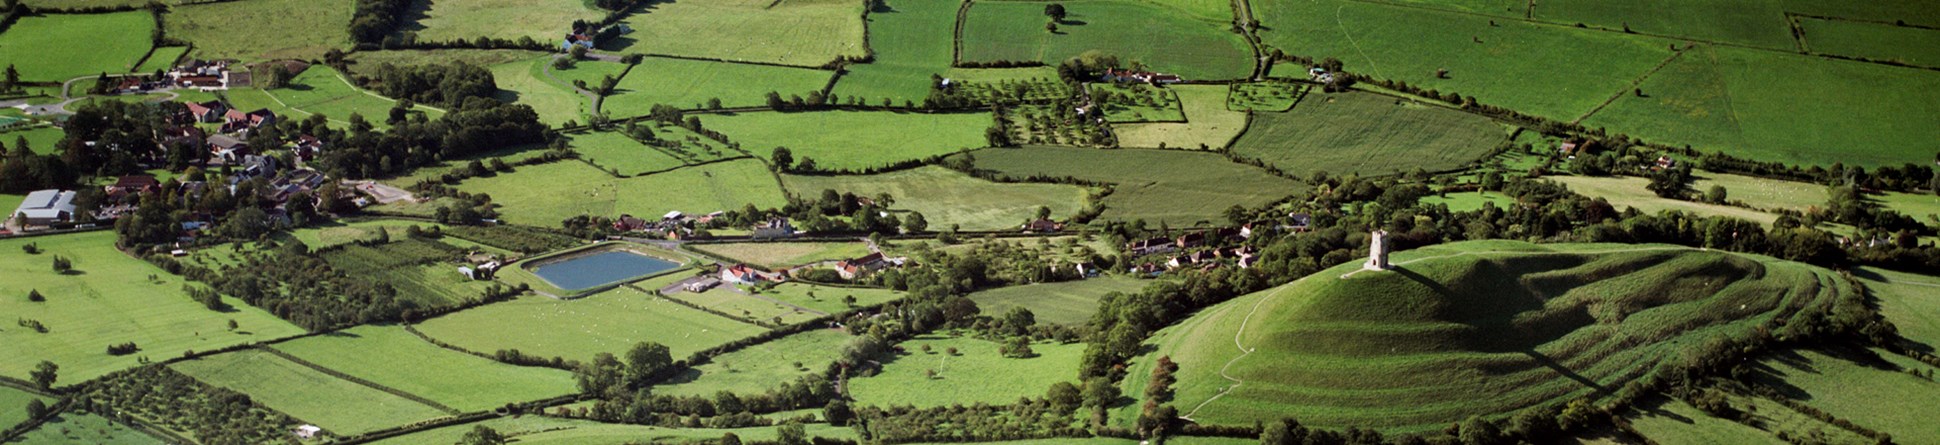 Colour aerial photograph of Glastonbury Tor 2009